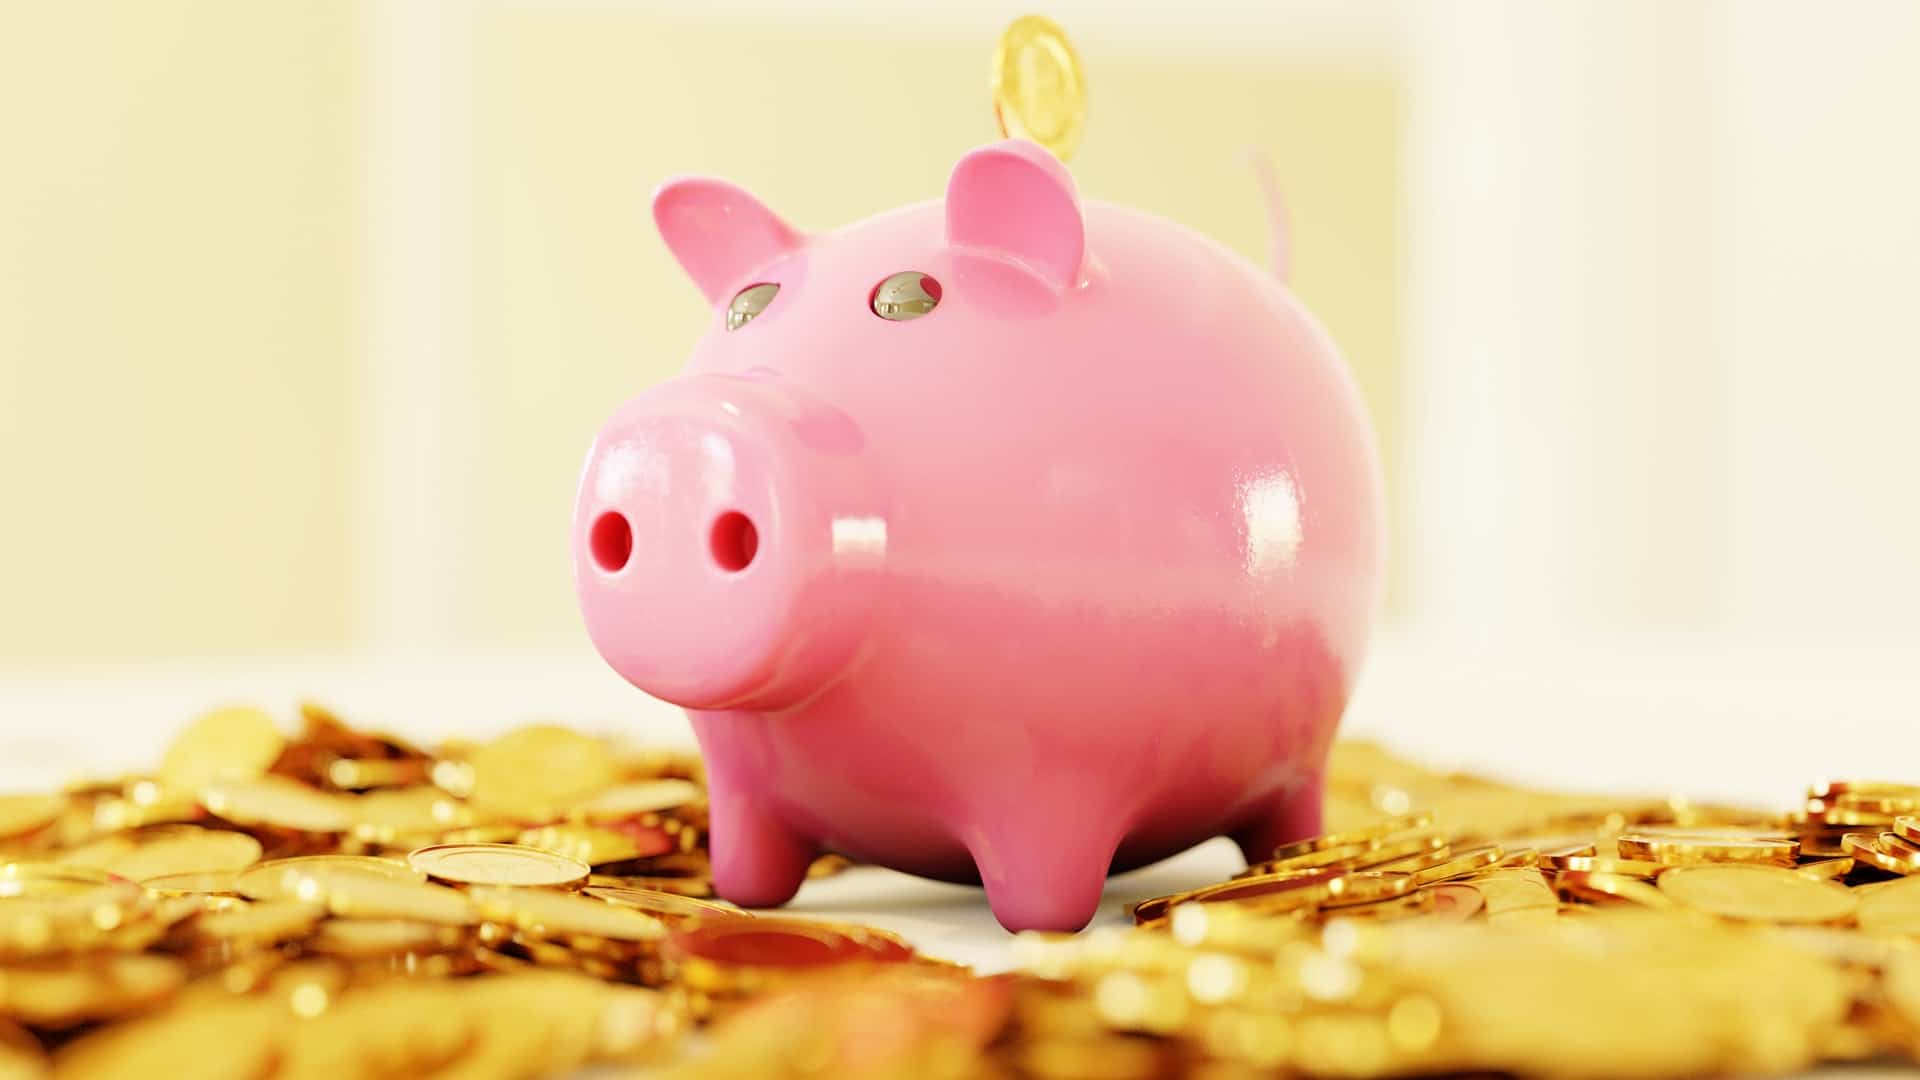 pink piggy bank and coin savings